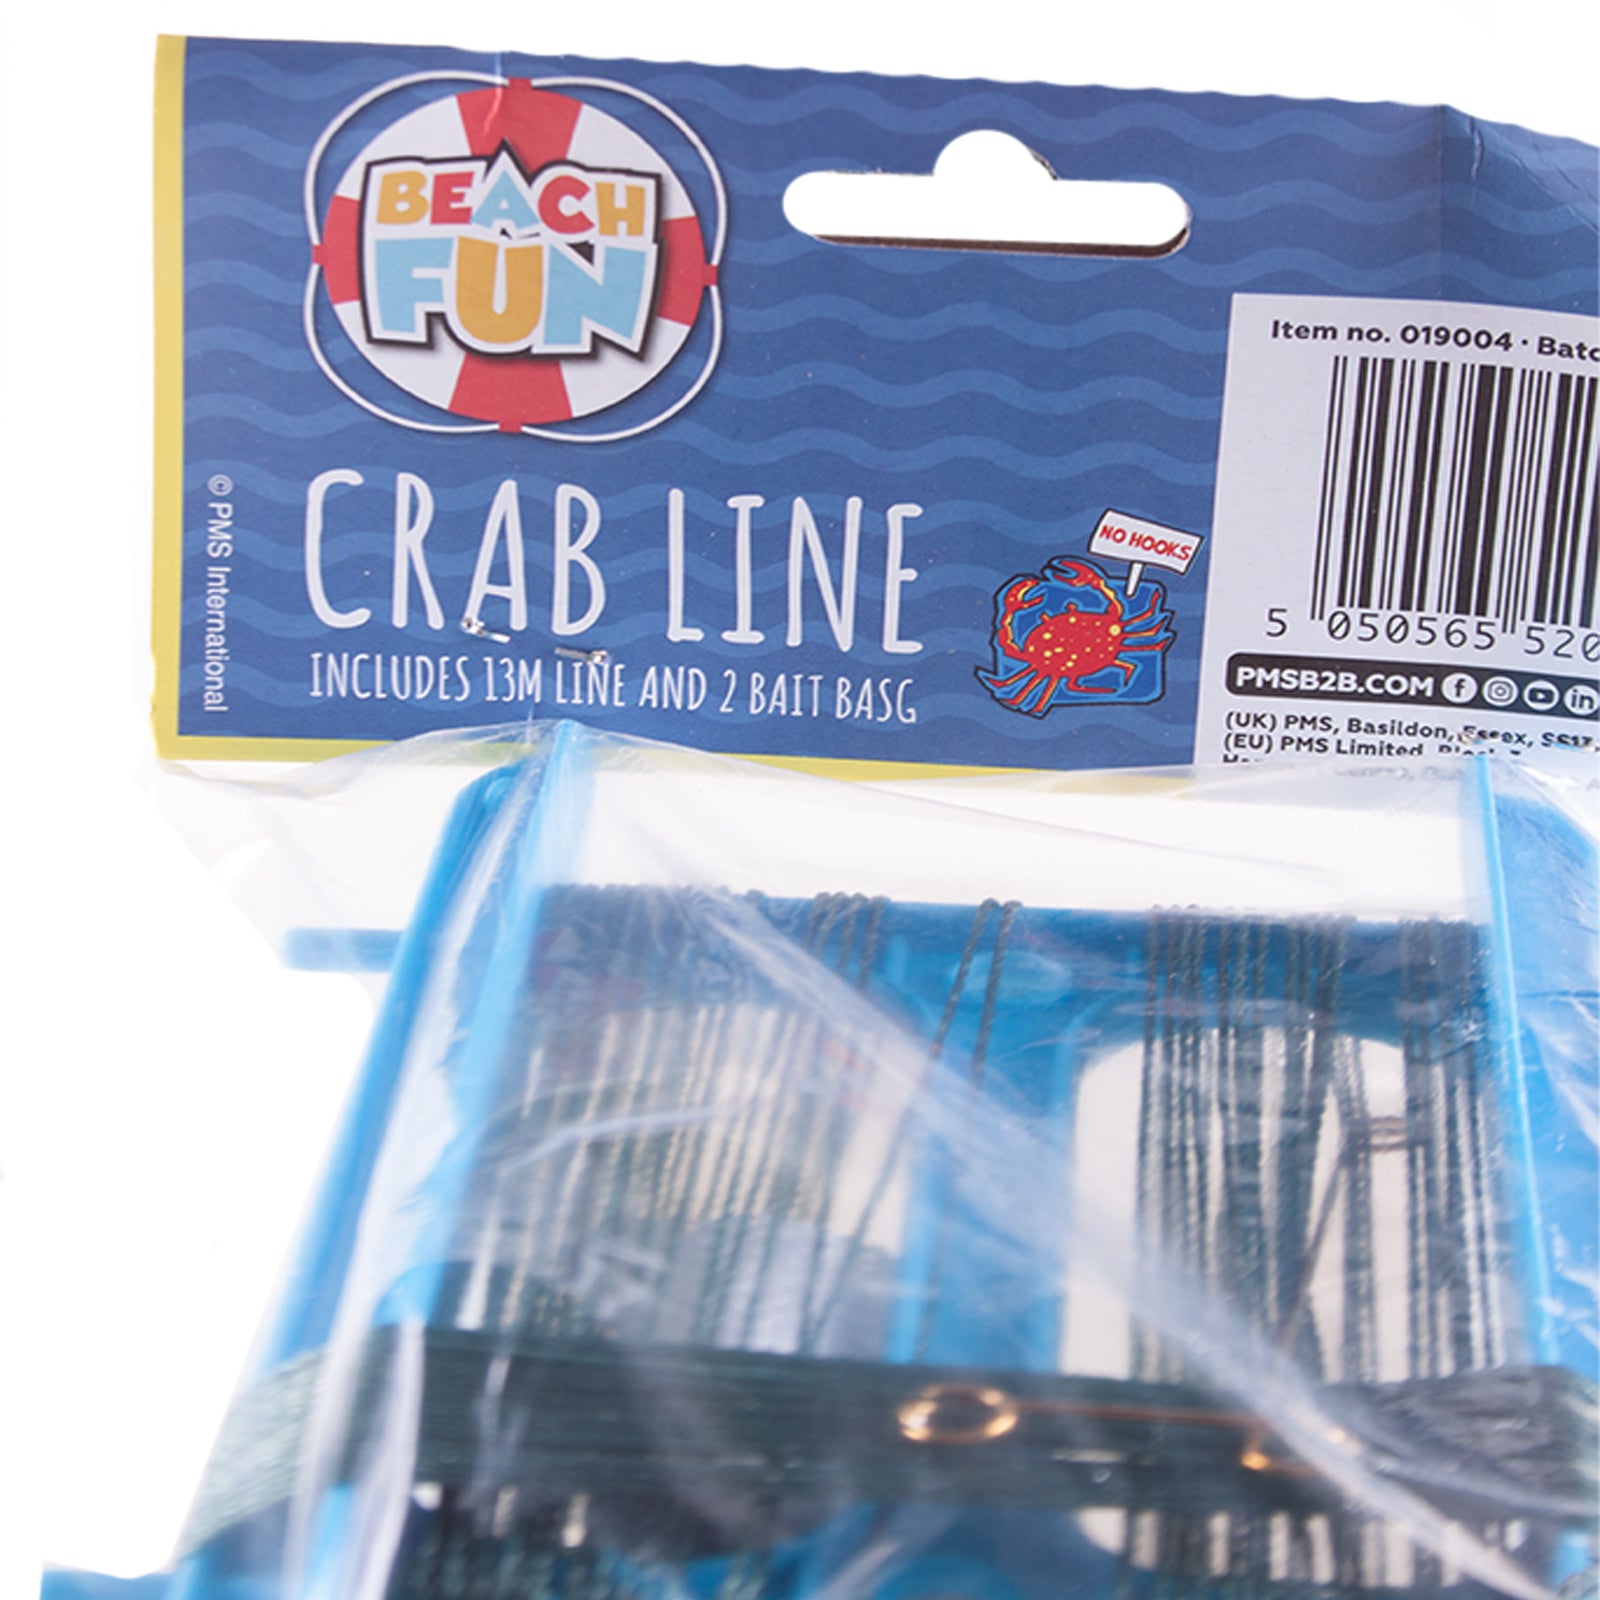 Beach Fun Crab Line & Bait Bags – Yorkshire Trading Company